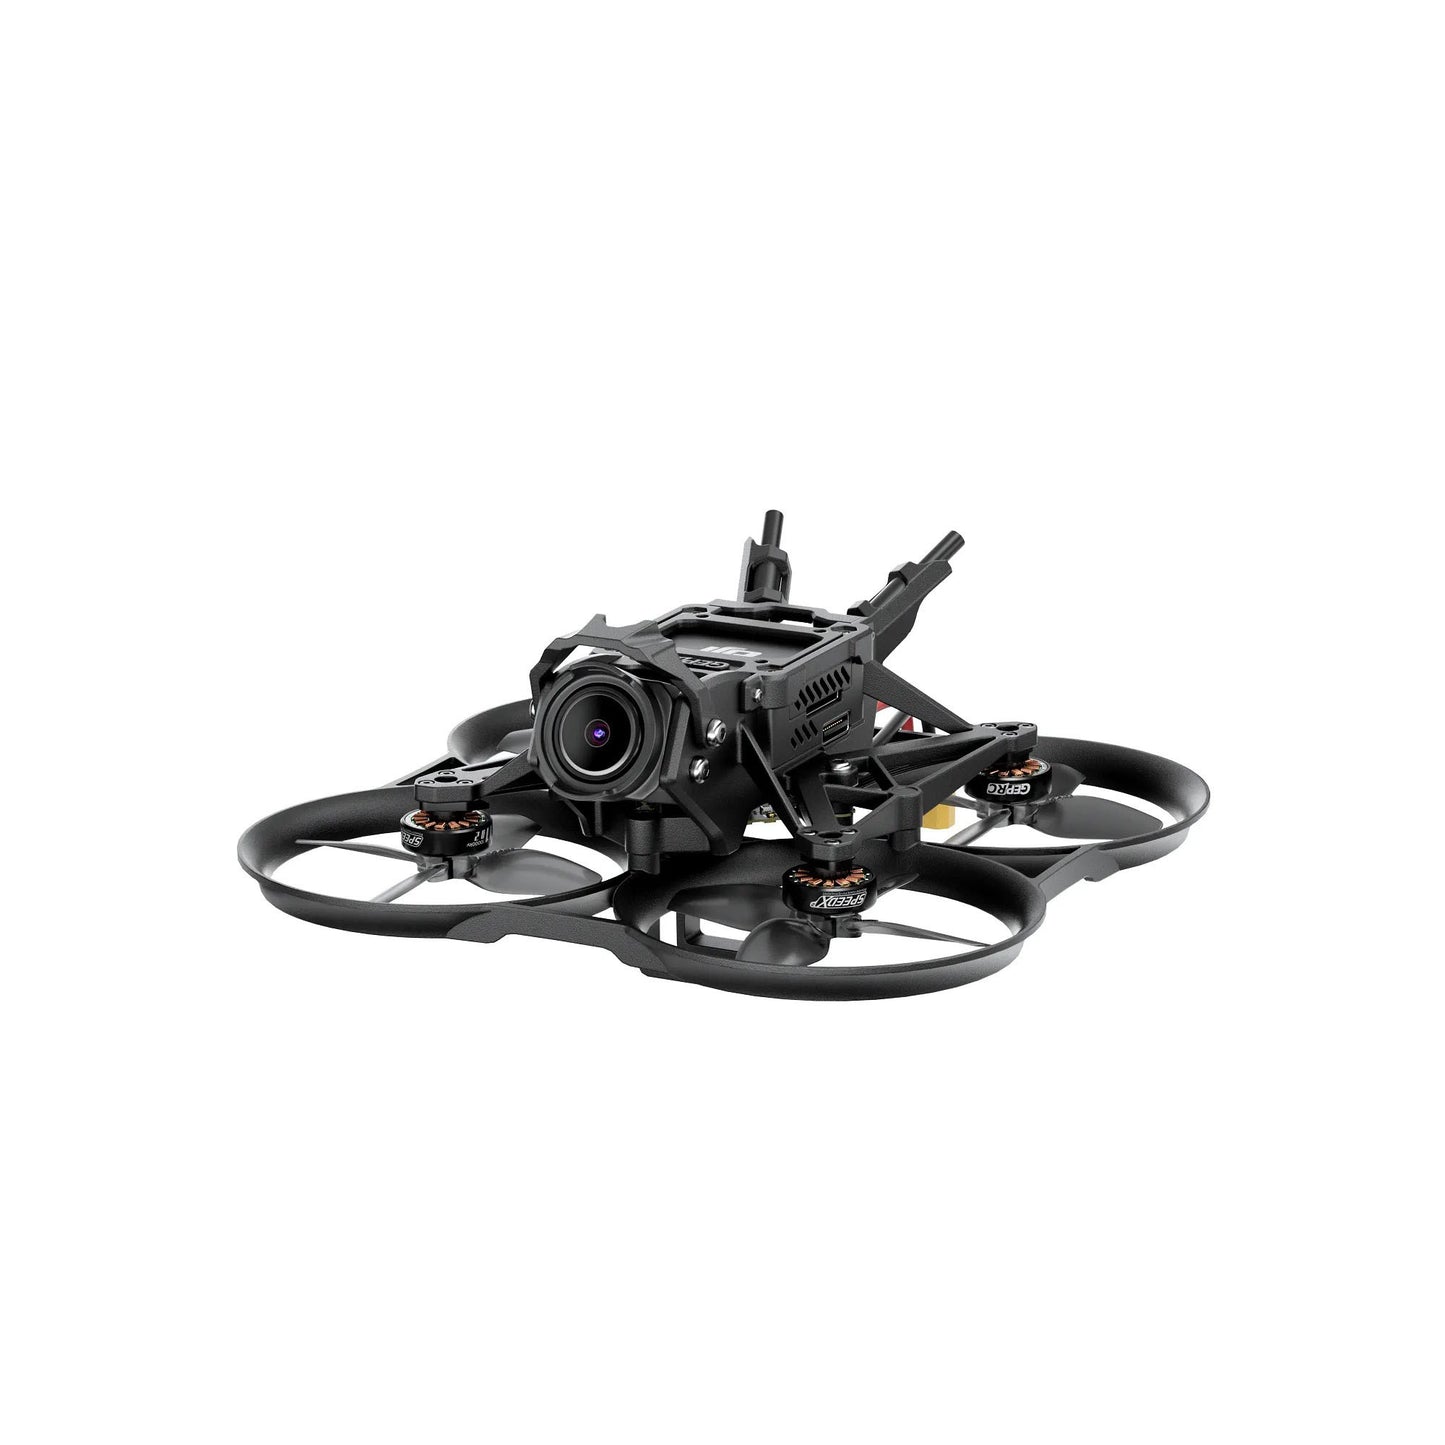 Geprs DarkStar20 HD O3 Cinewhoop - SPEEDX2 1102 TAKER F411-12A-E 1-2S AIO RC quadrirotor longue portée Freestyle FPV Drone avion Rc